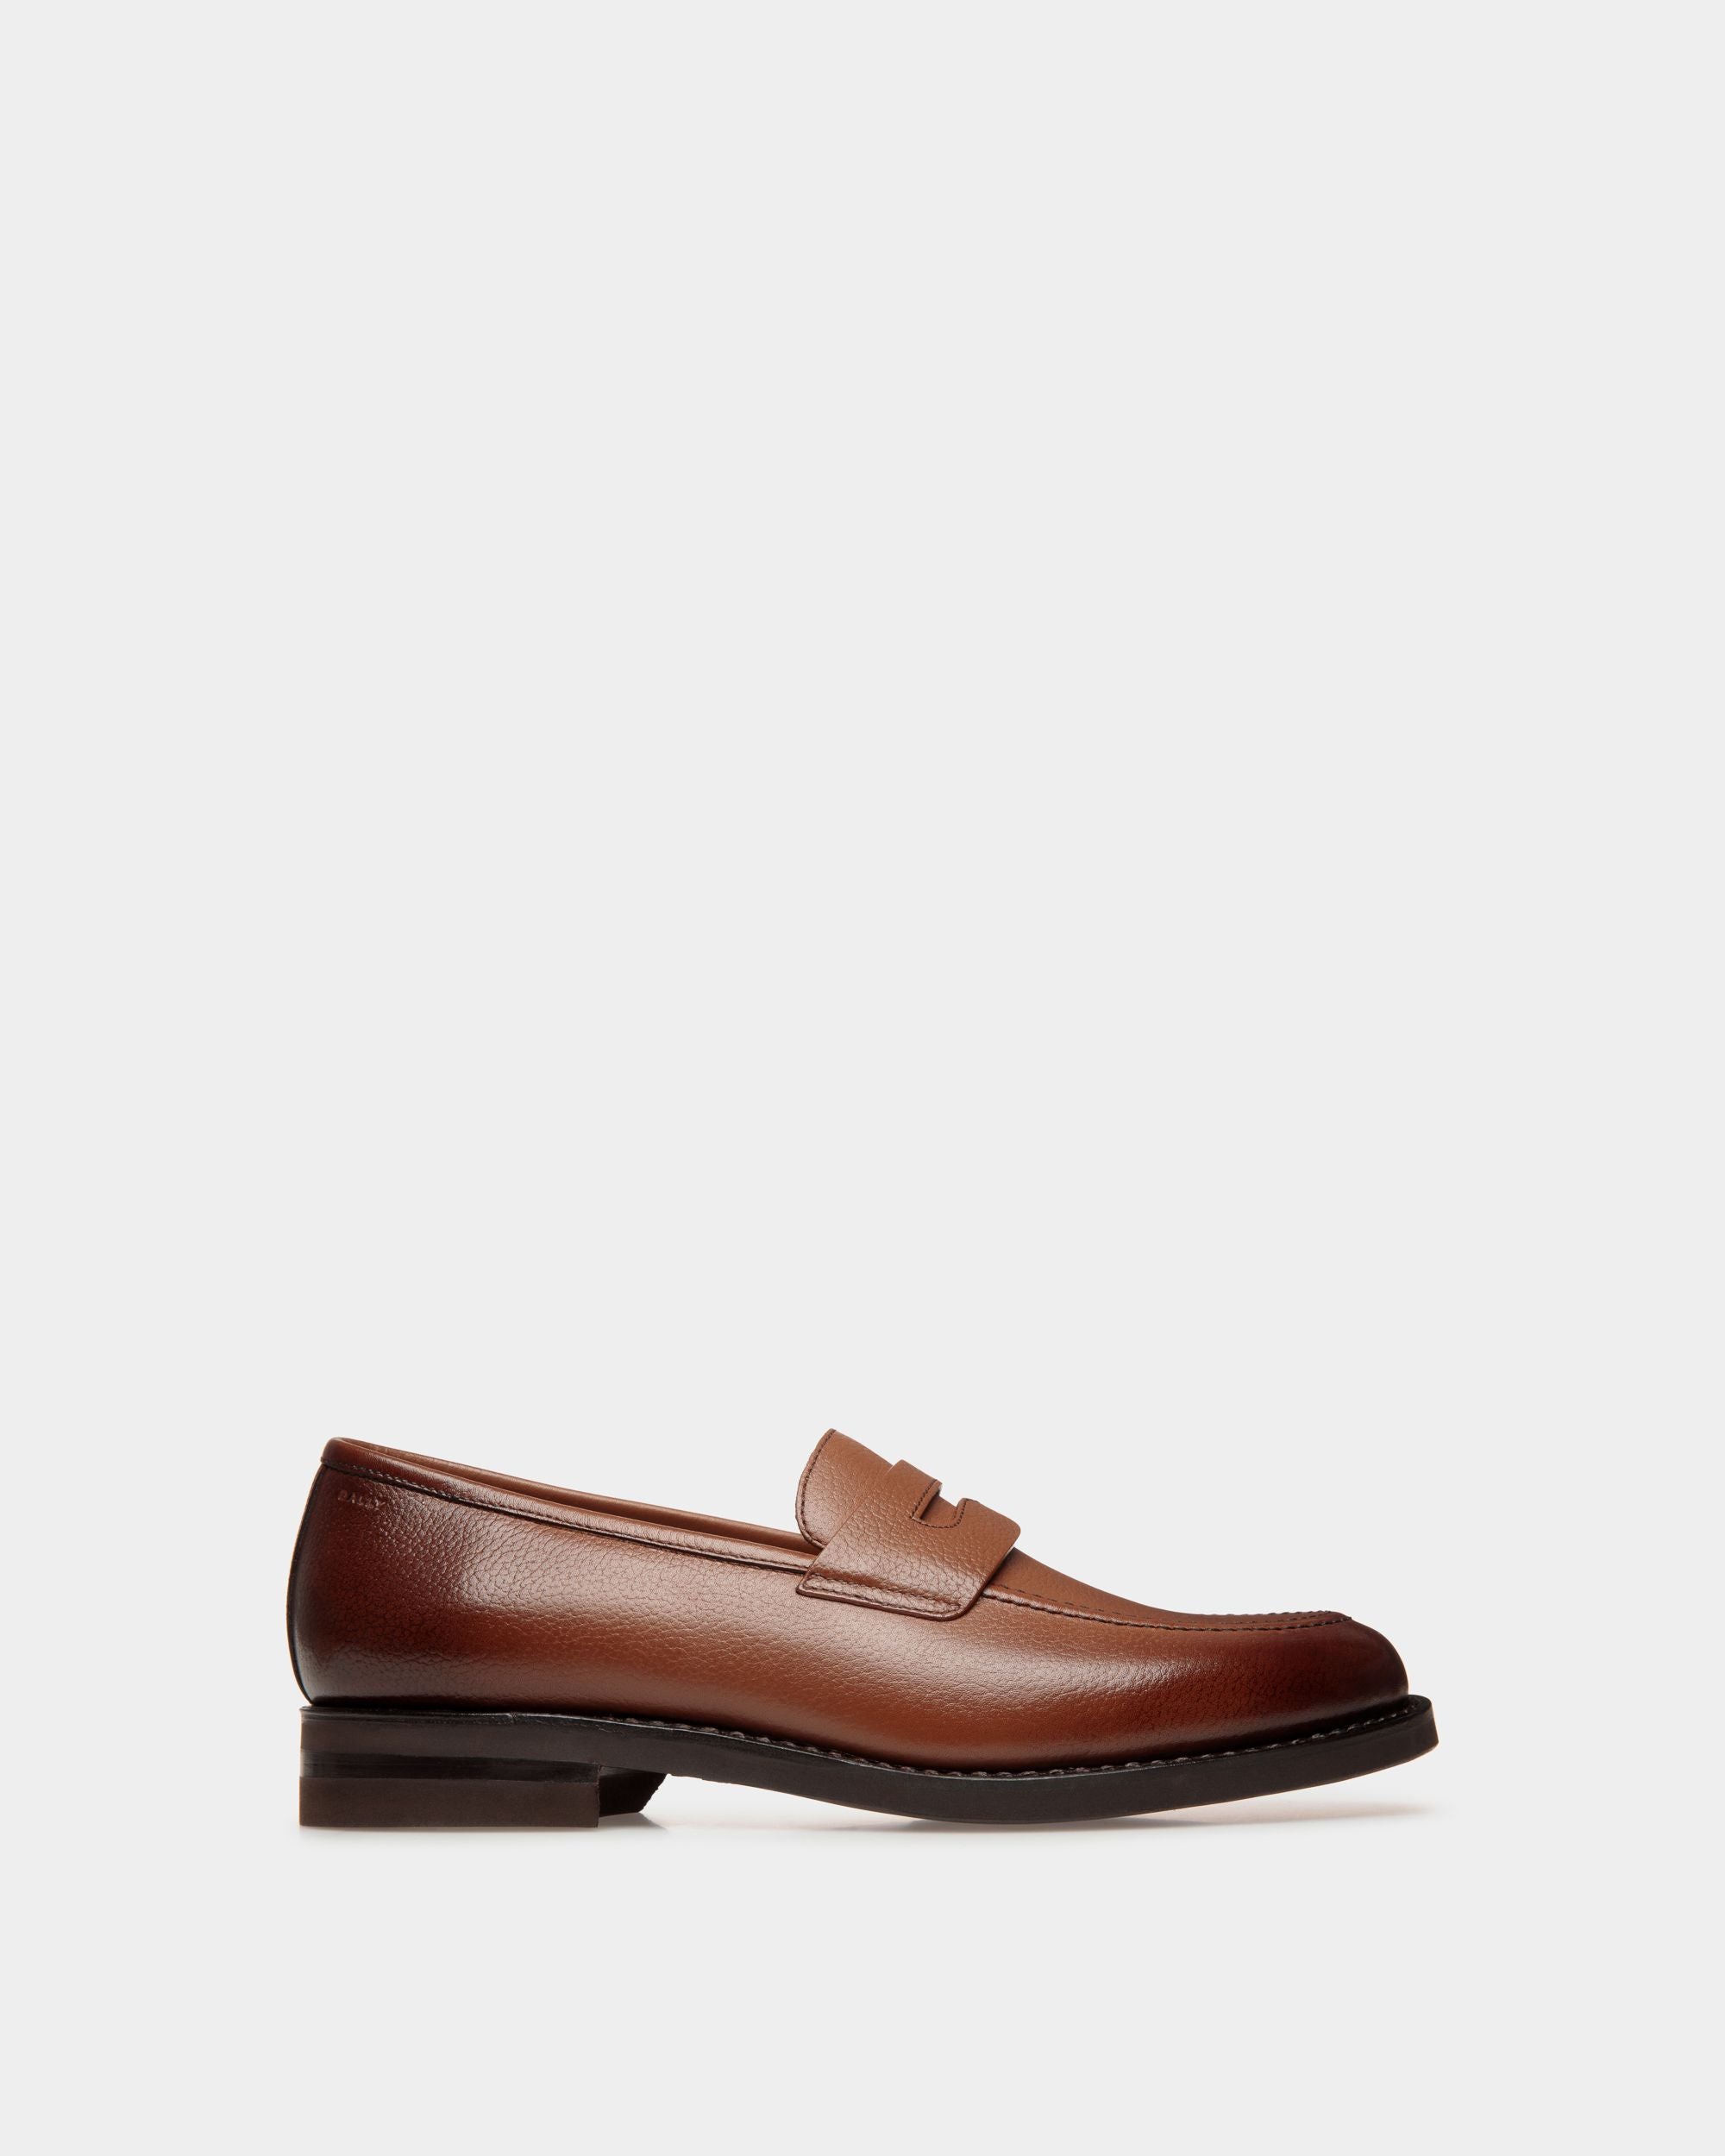 Schoenen | Men's Loafer in Brown Embossed Leather | Bally | Still Life Side